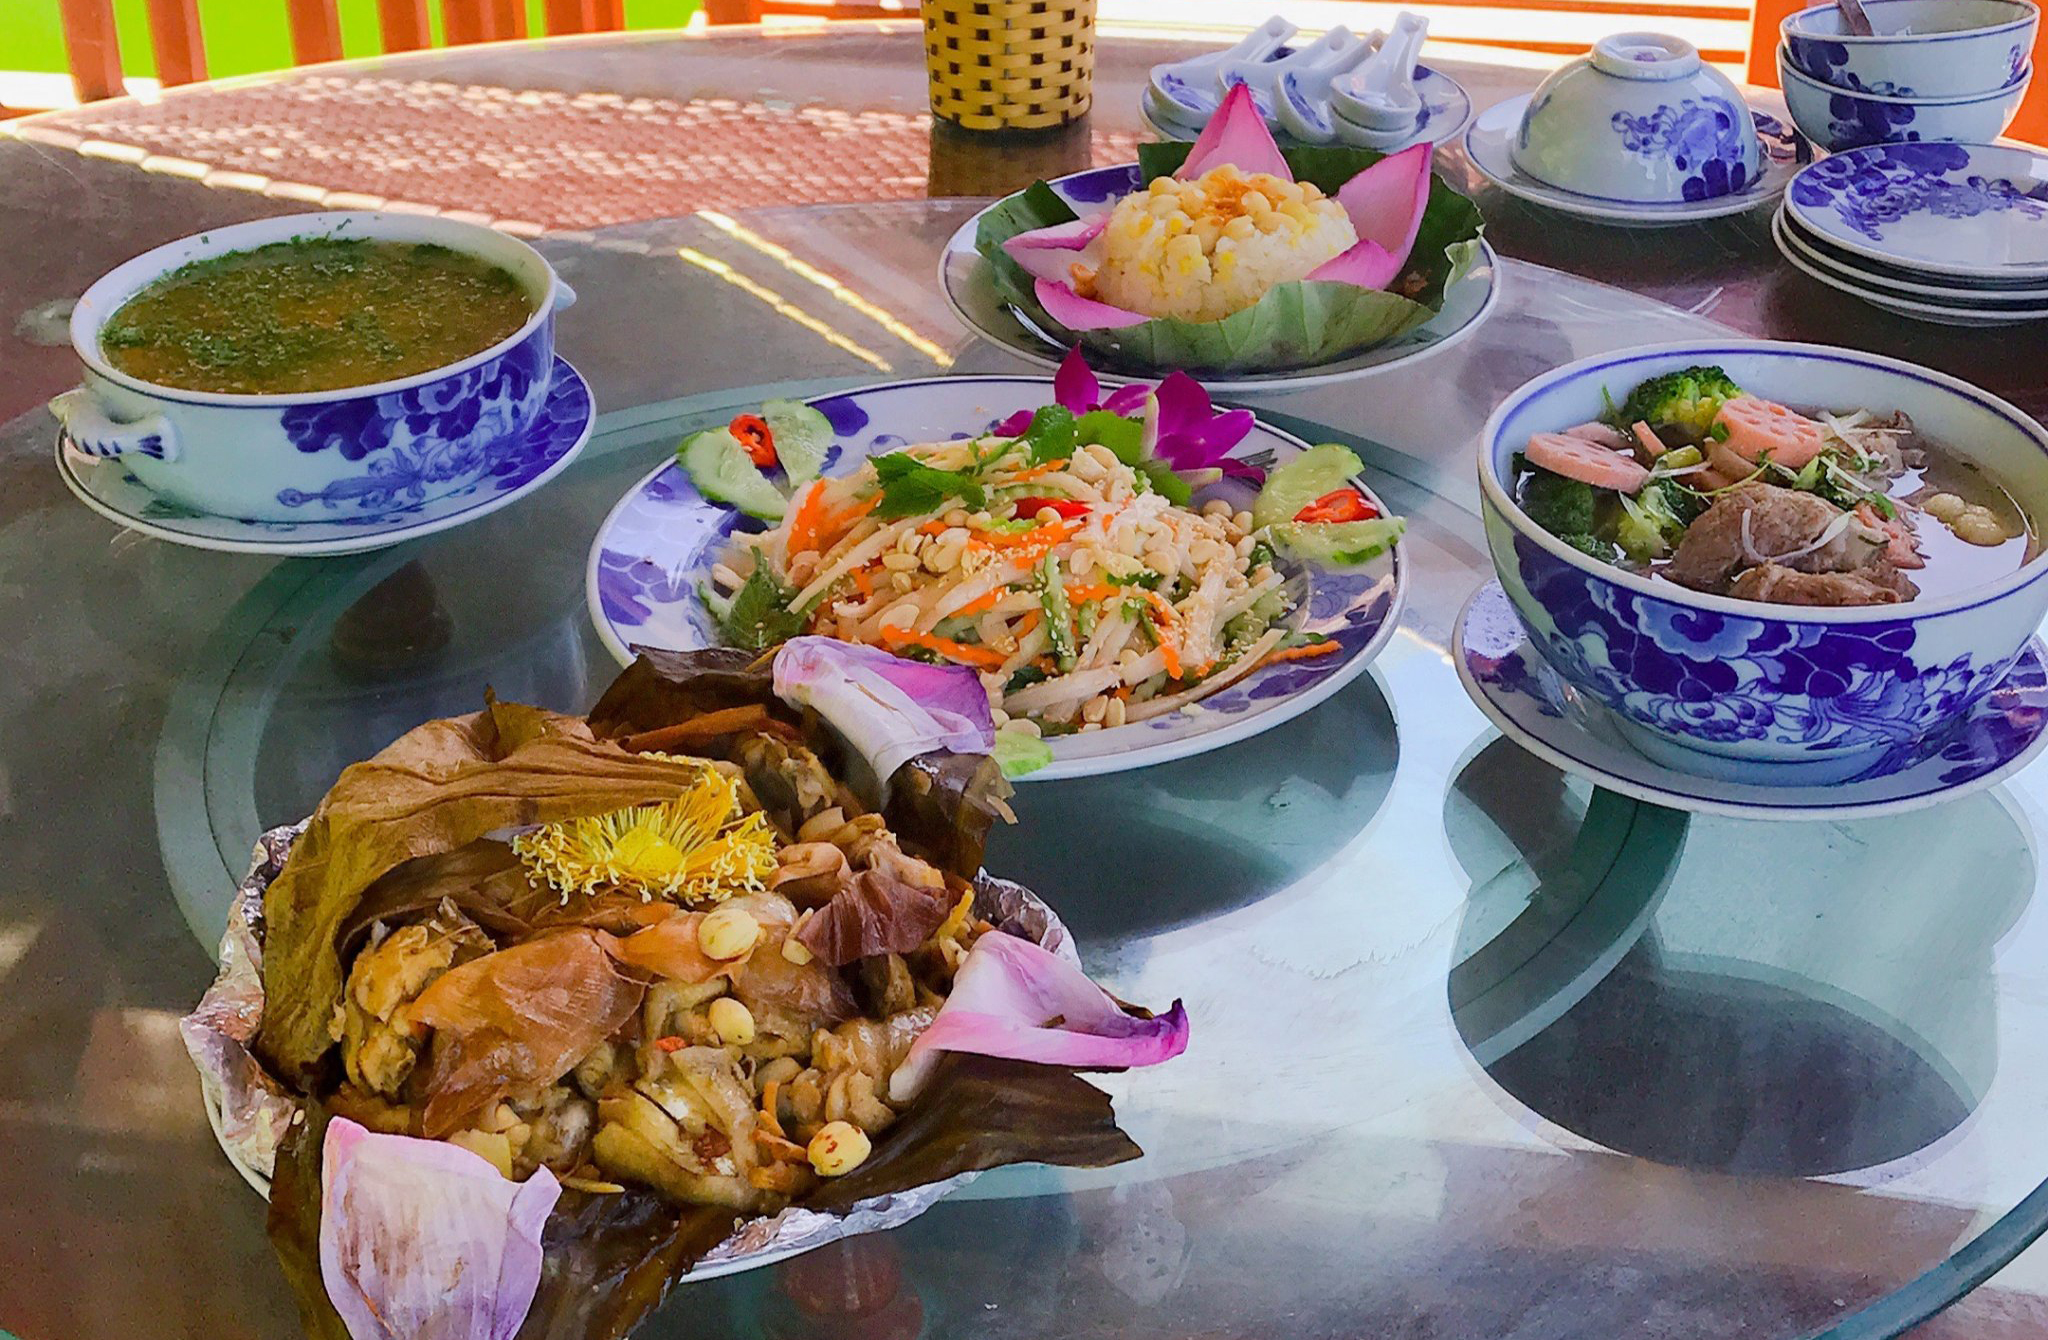 Ninh Binh homestays offer taste of northern Vietnam rural life